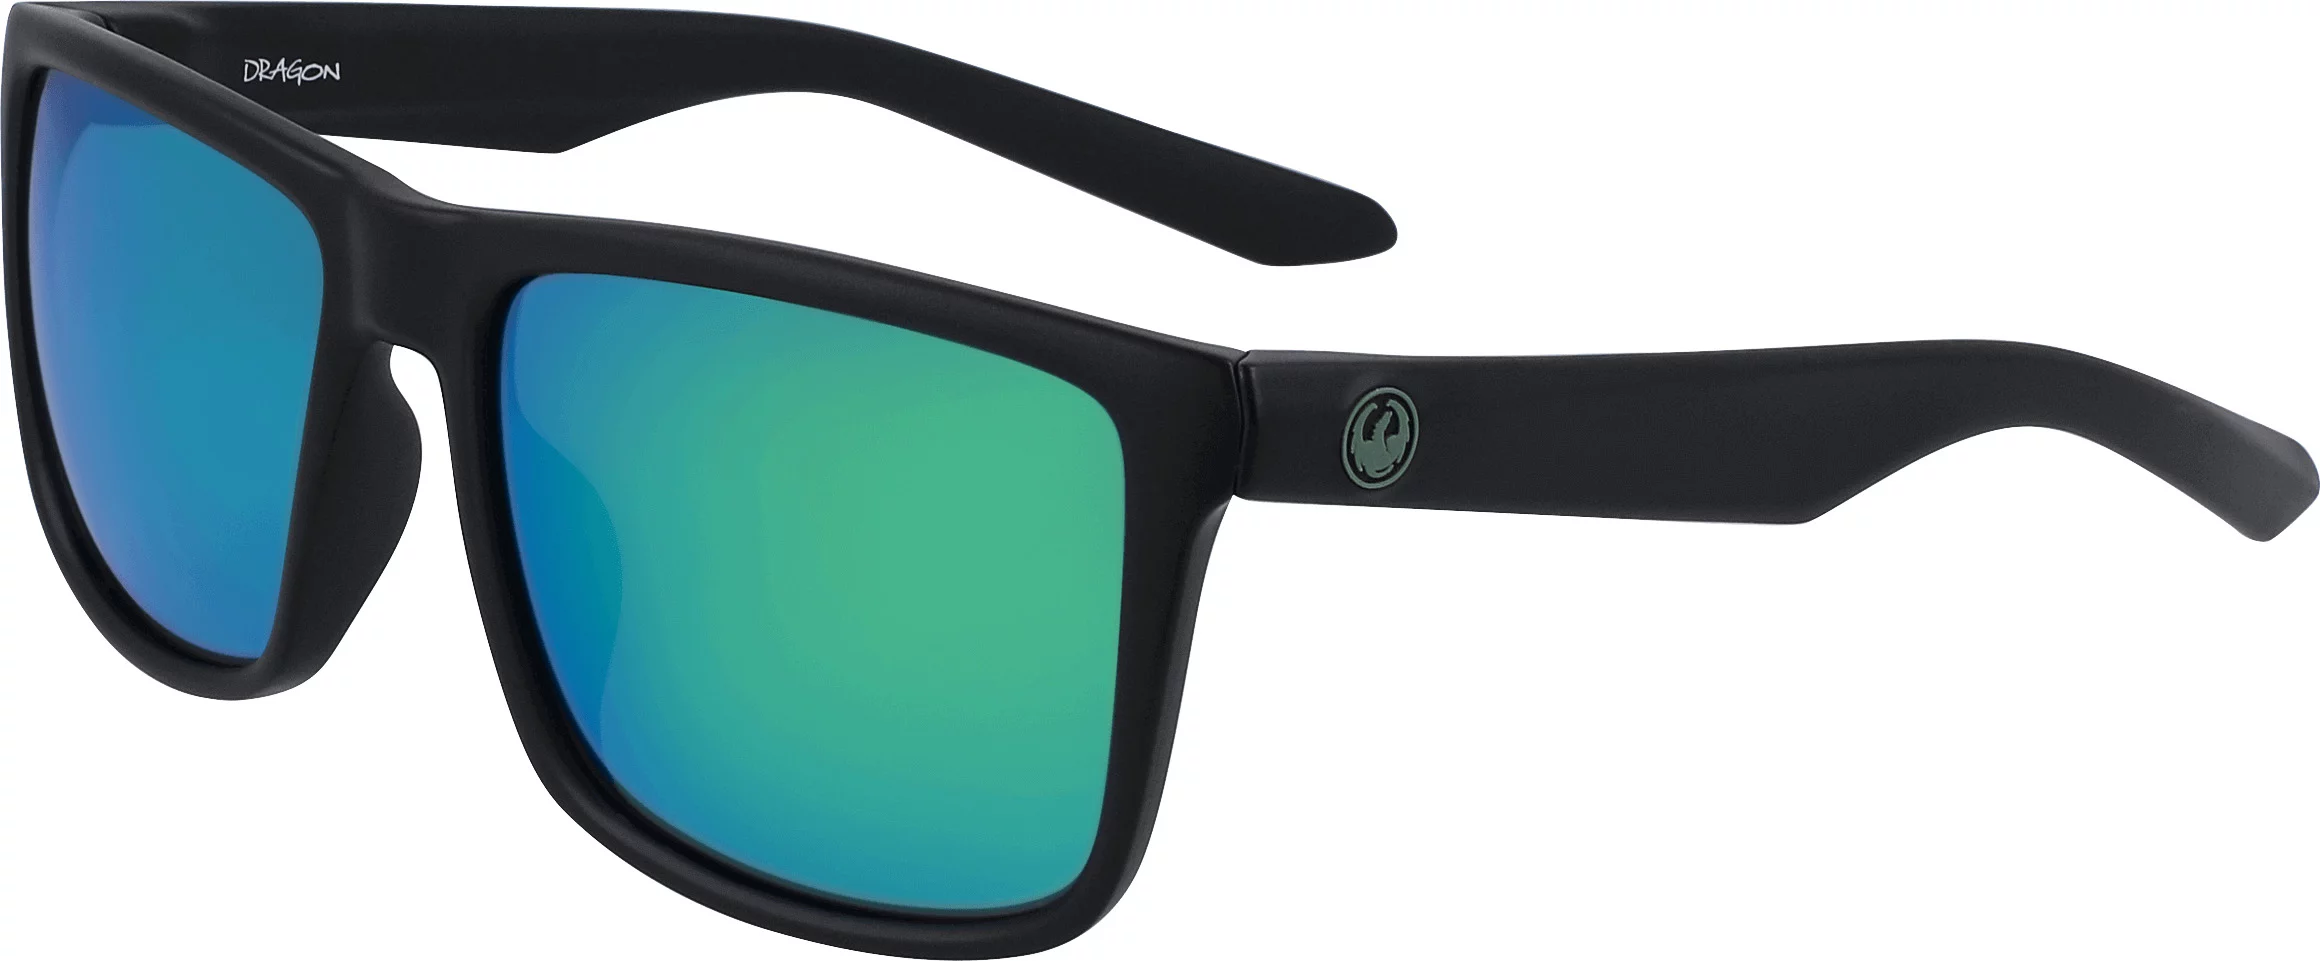 Dragon Cutback H2O Sunglasses Matte Black Polarized Blue Ion Lens 35143-007